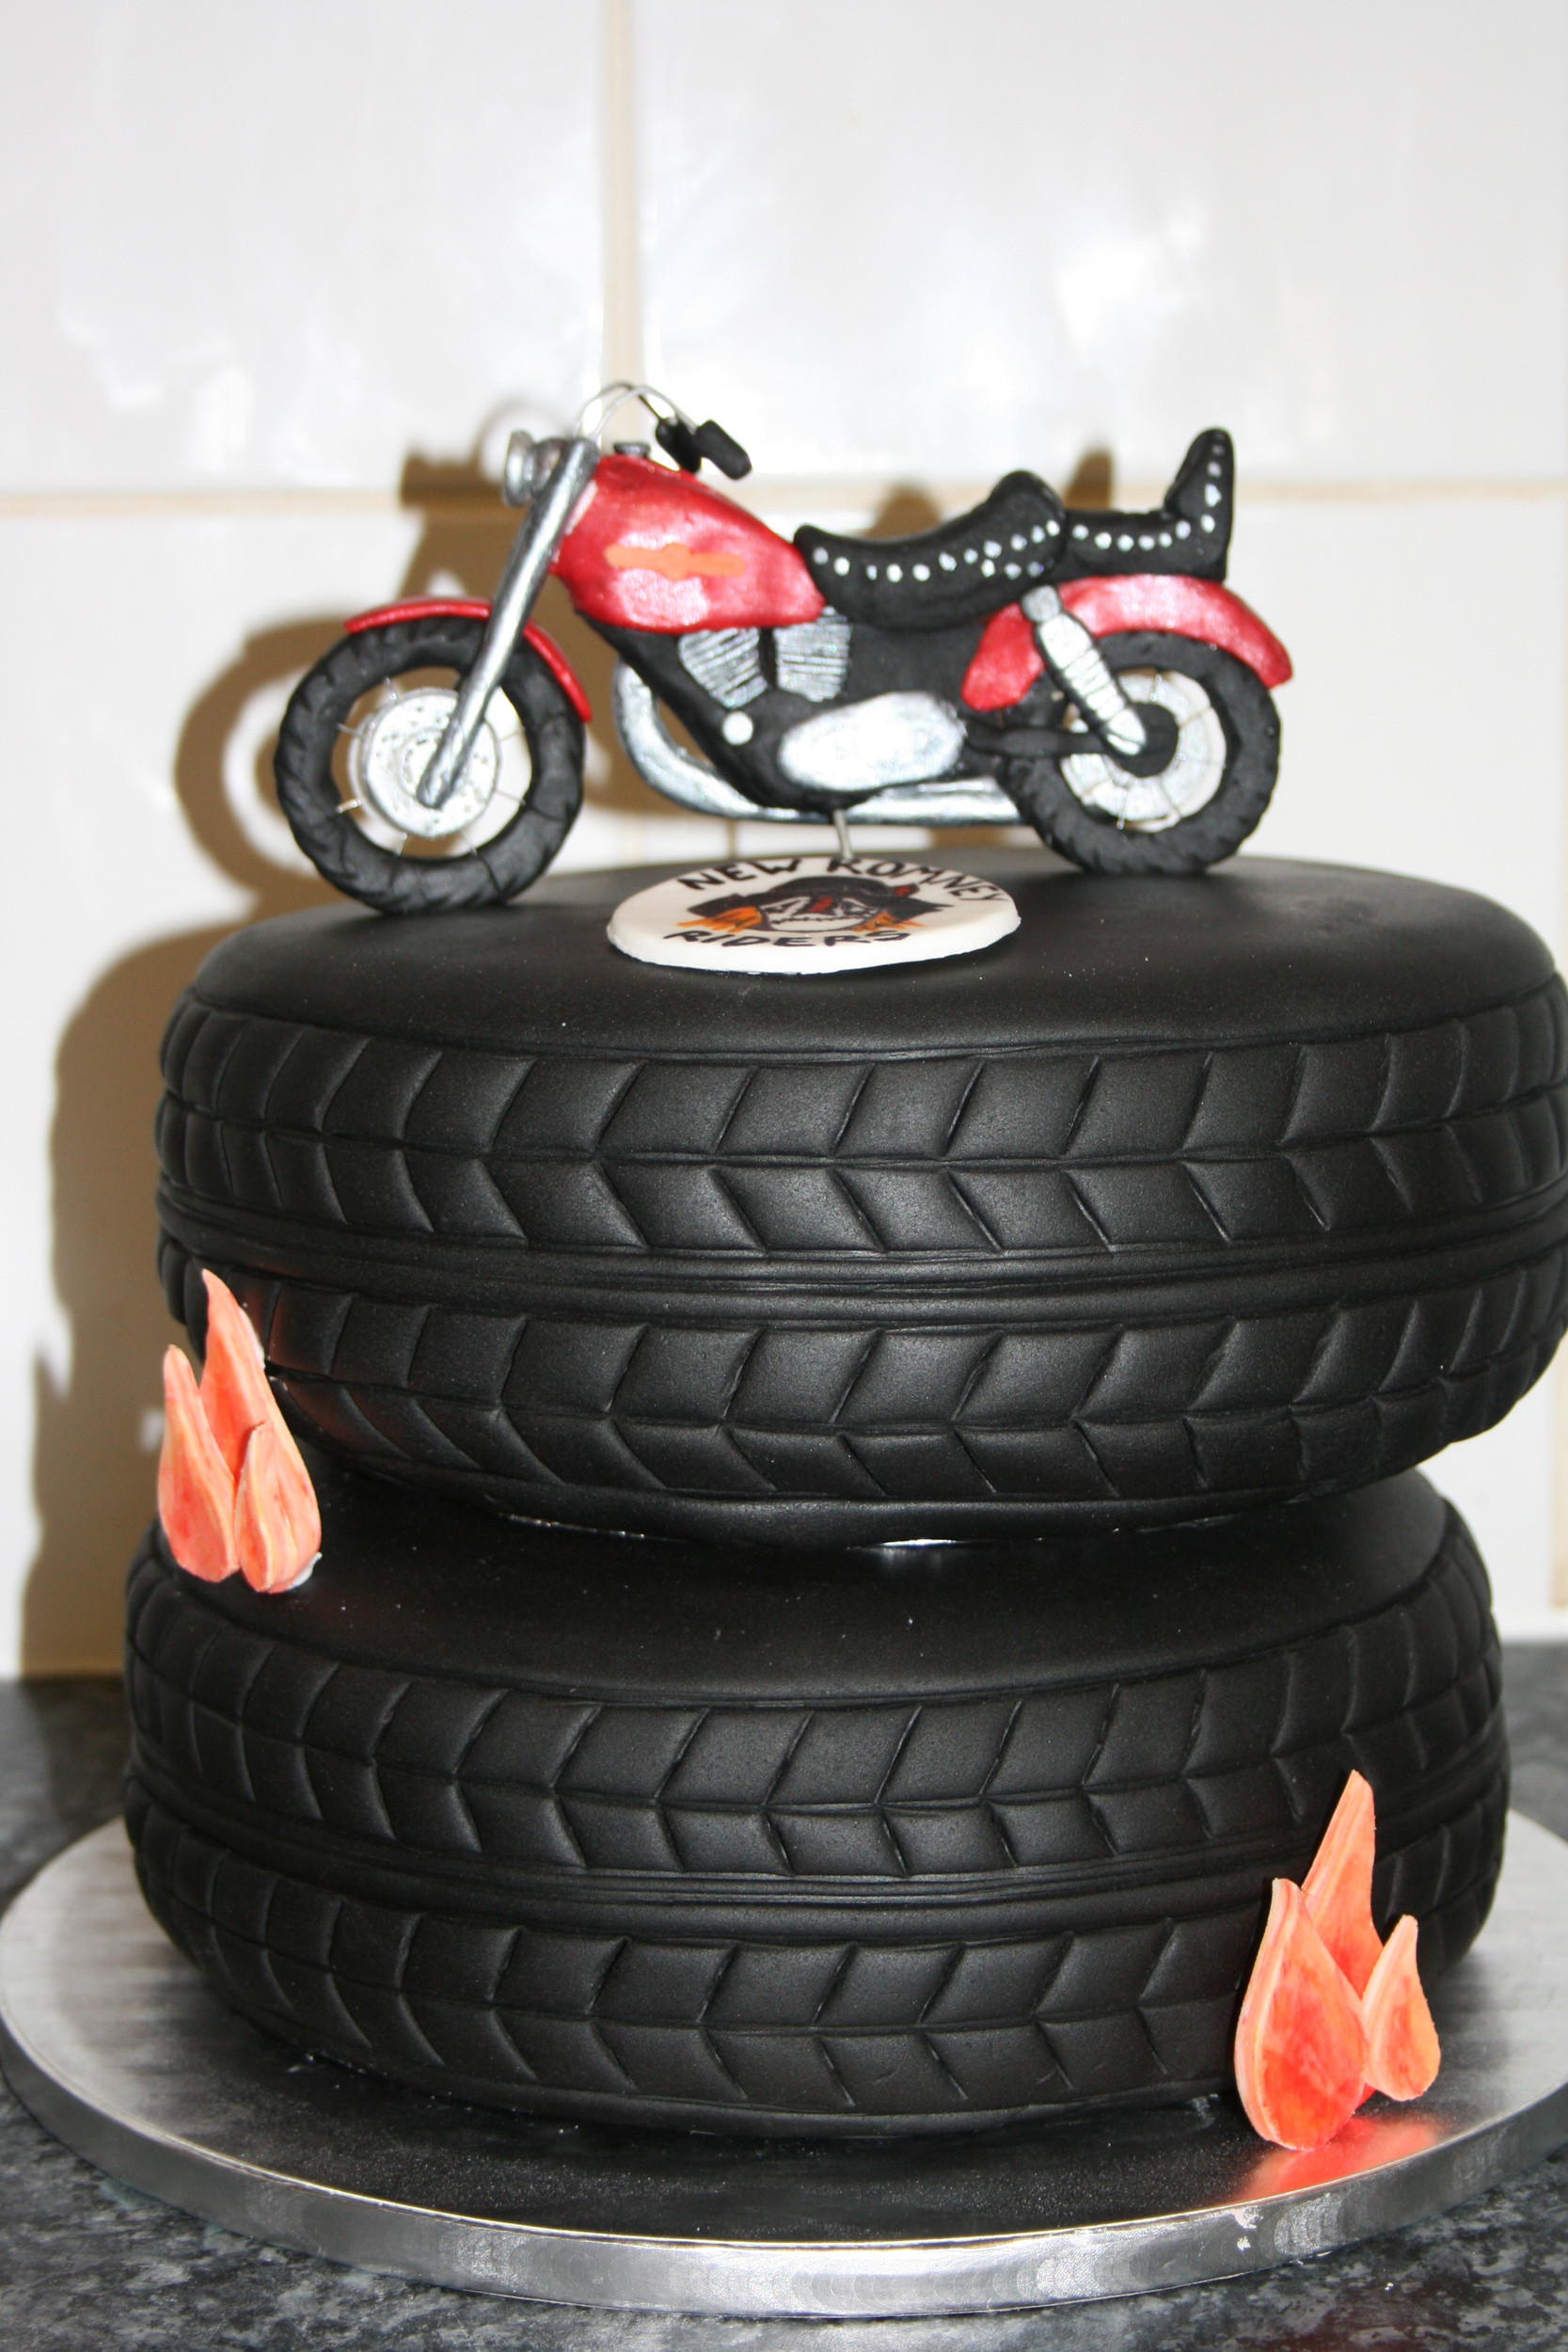 Motorcycle Birthday Cakes
 Harley Davidson cake